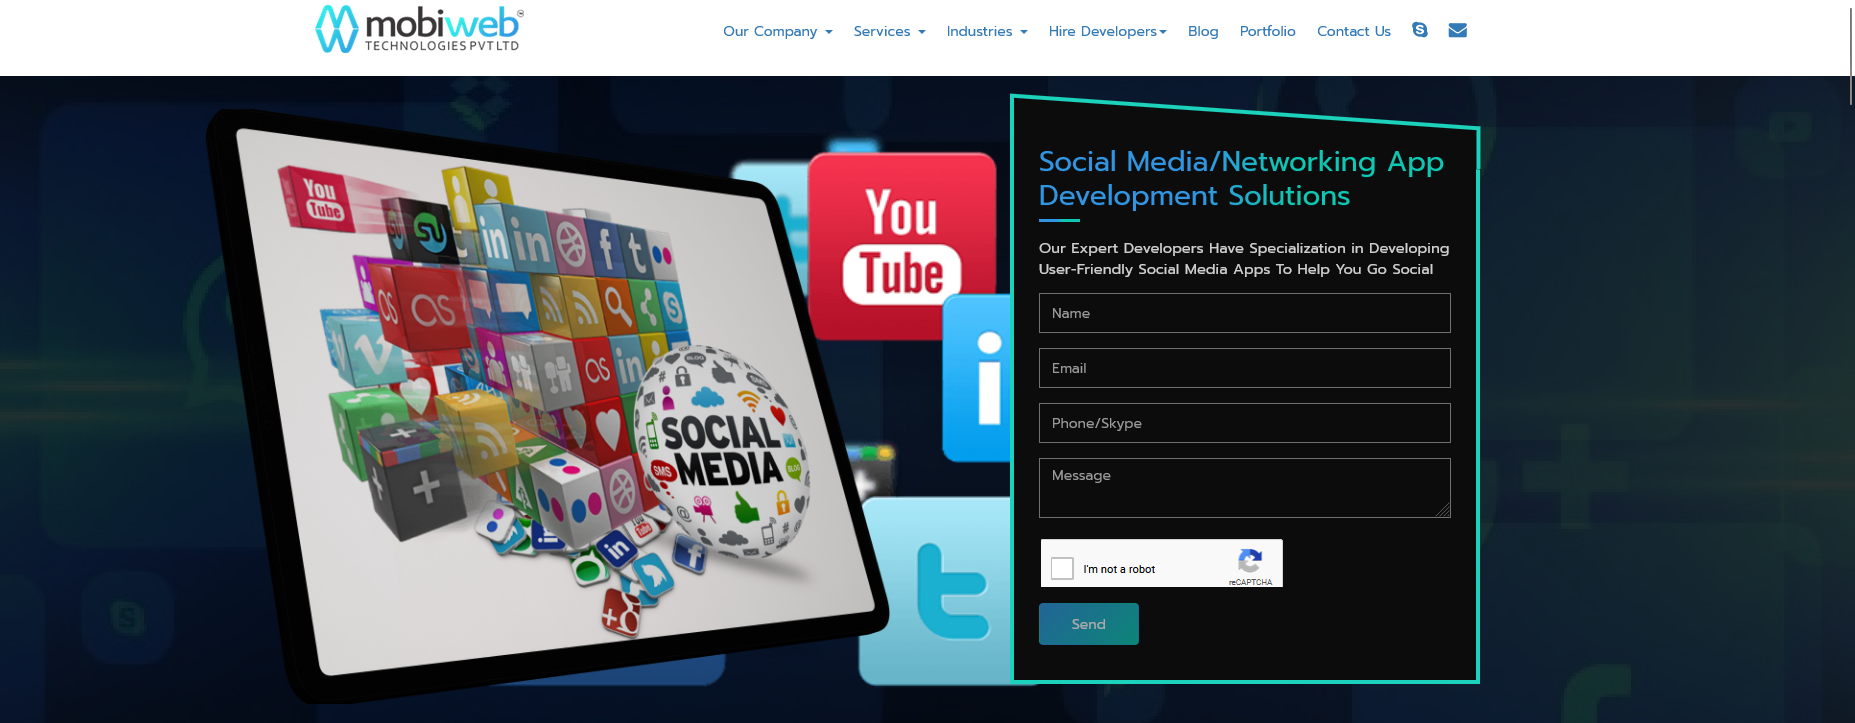 Graphics - Social Media App Development Company - Mobiweb